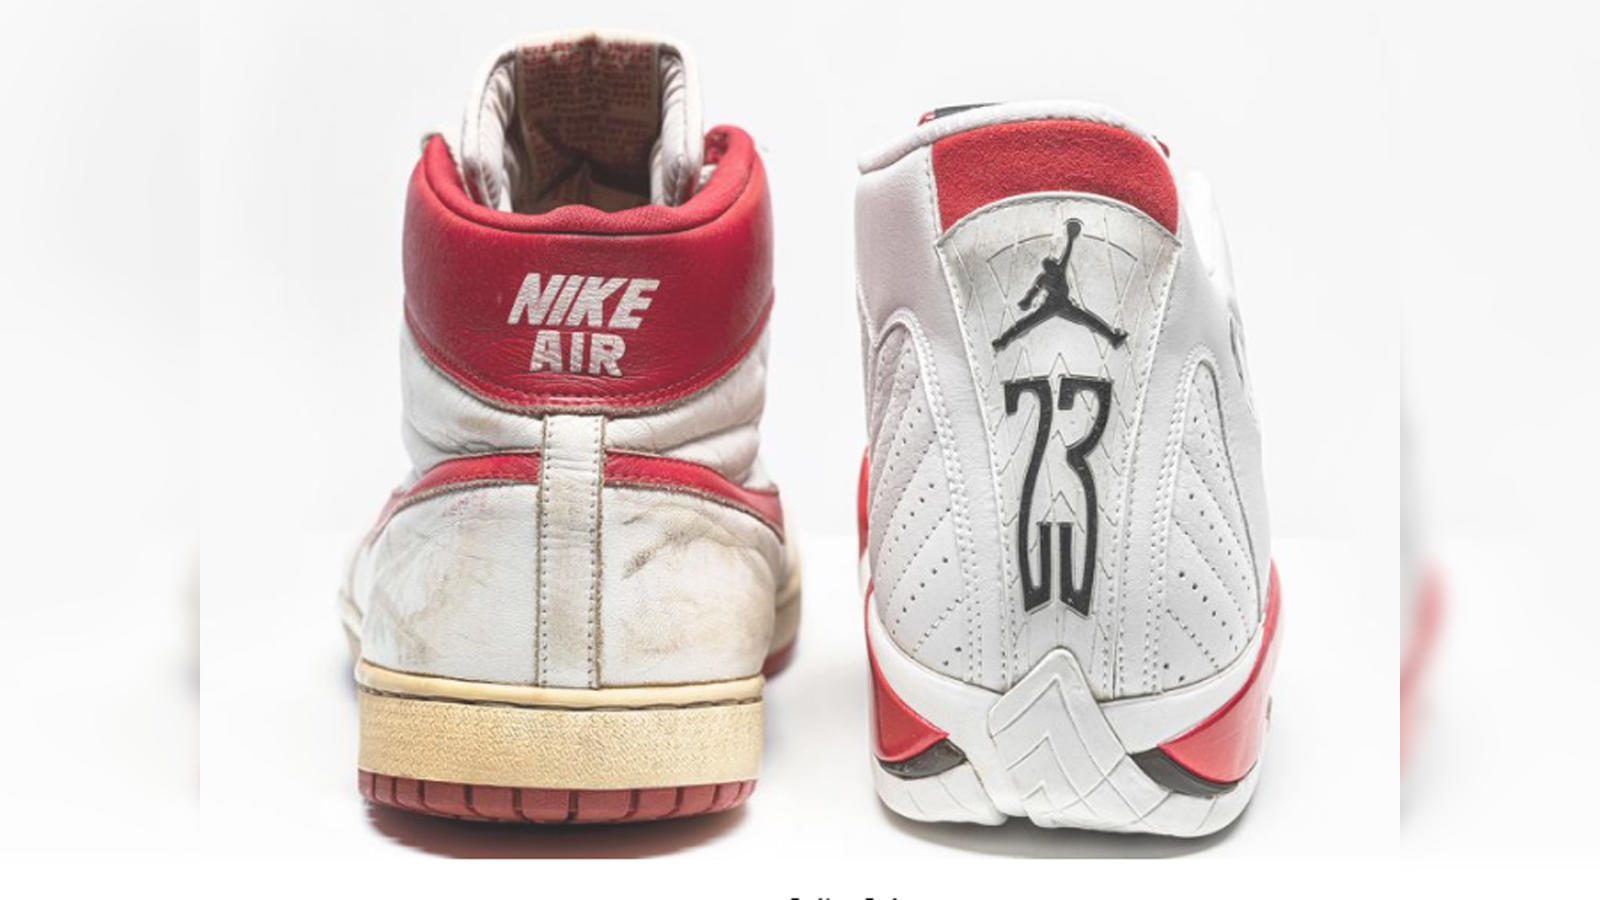 What Jordan sneakers do you own